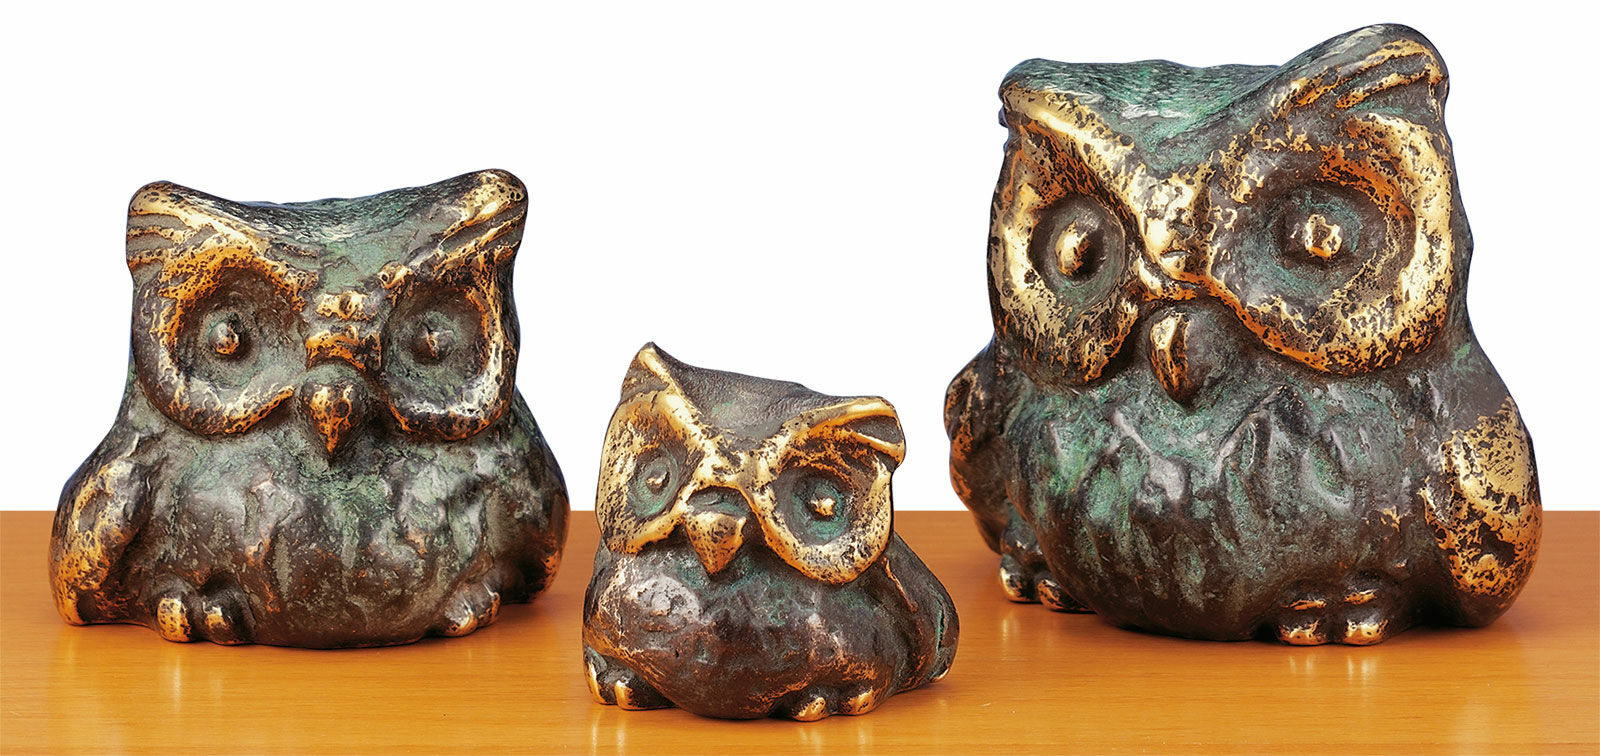 Owl trio "An Owl Family", bronze by Klaus Albert